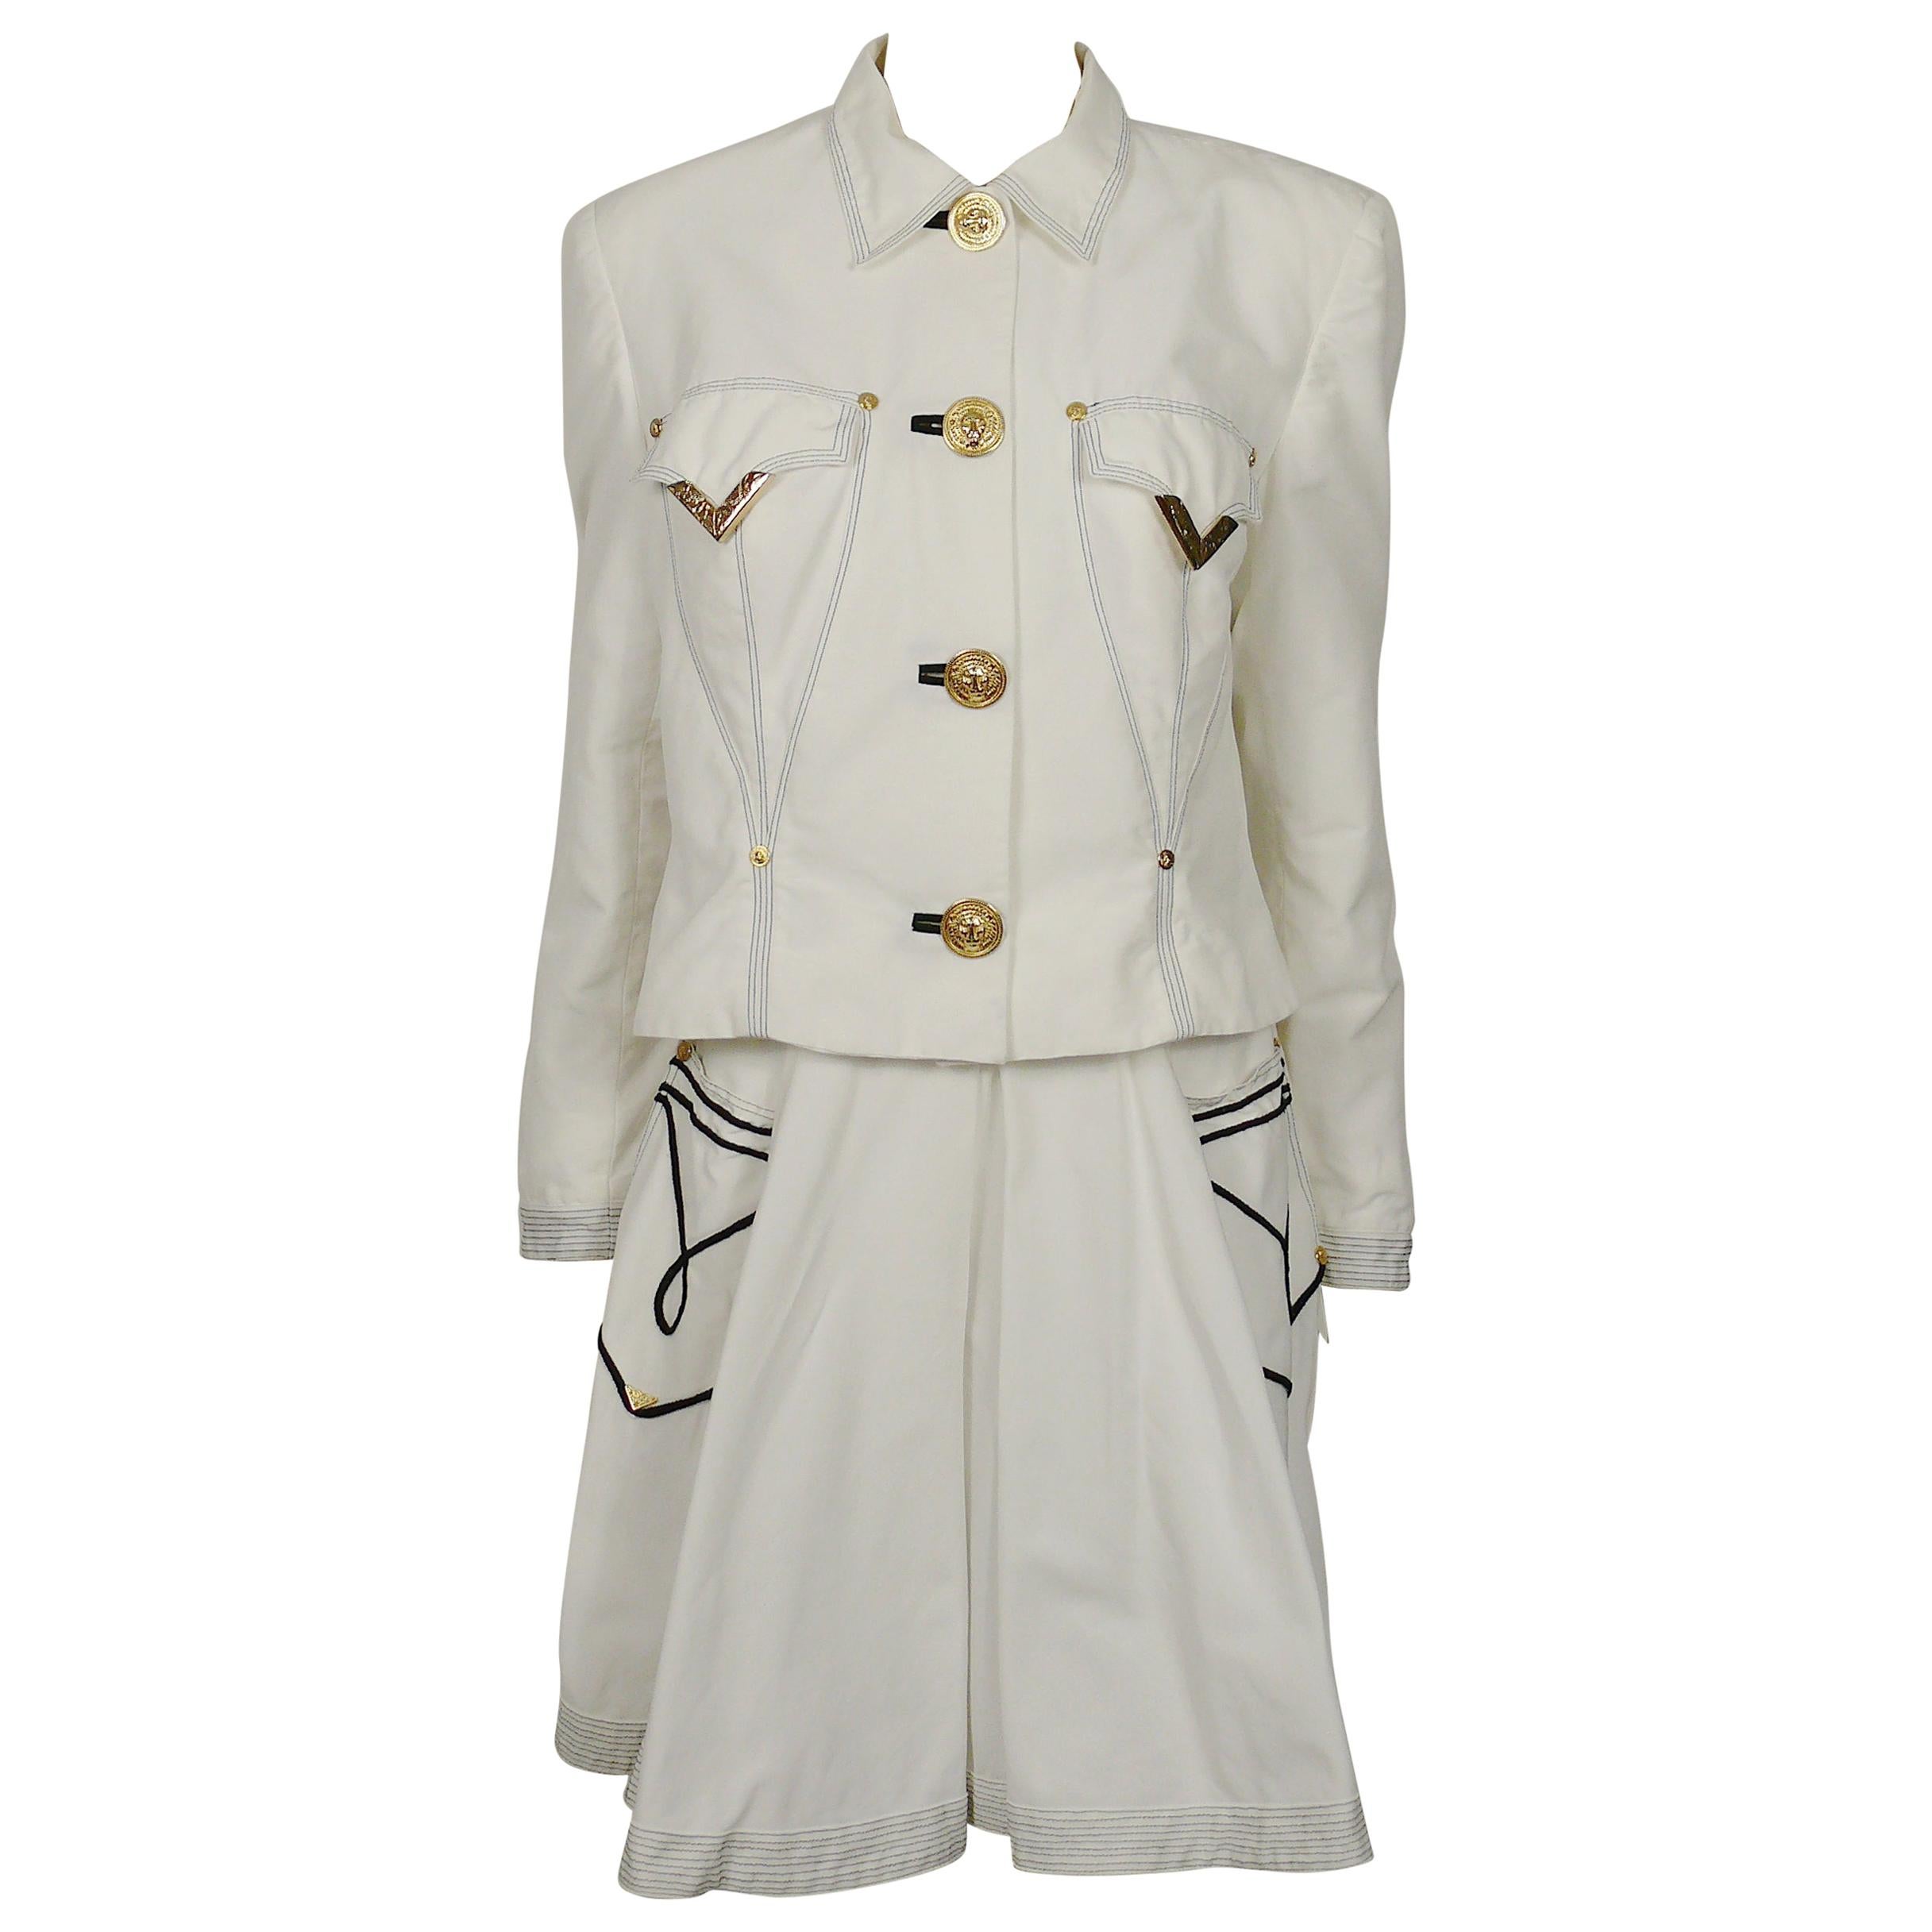 Gianni Versace Versus Vintage White Jacket & Skirt Ensemble with Western Details